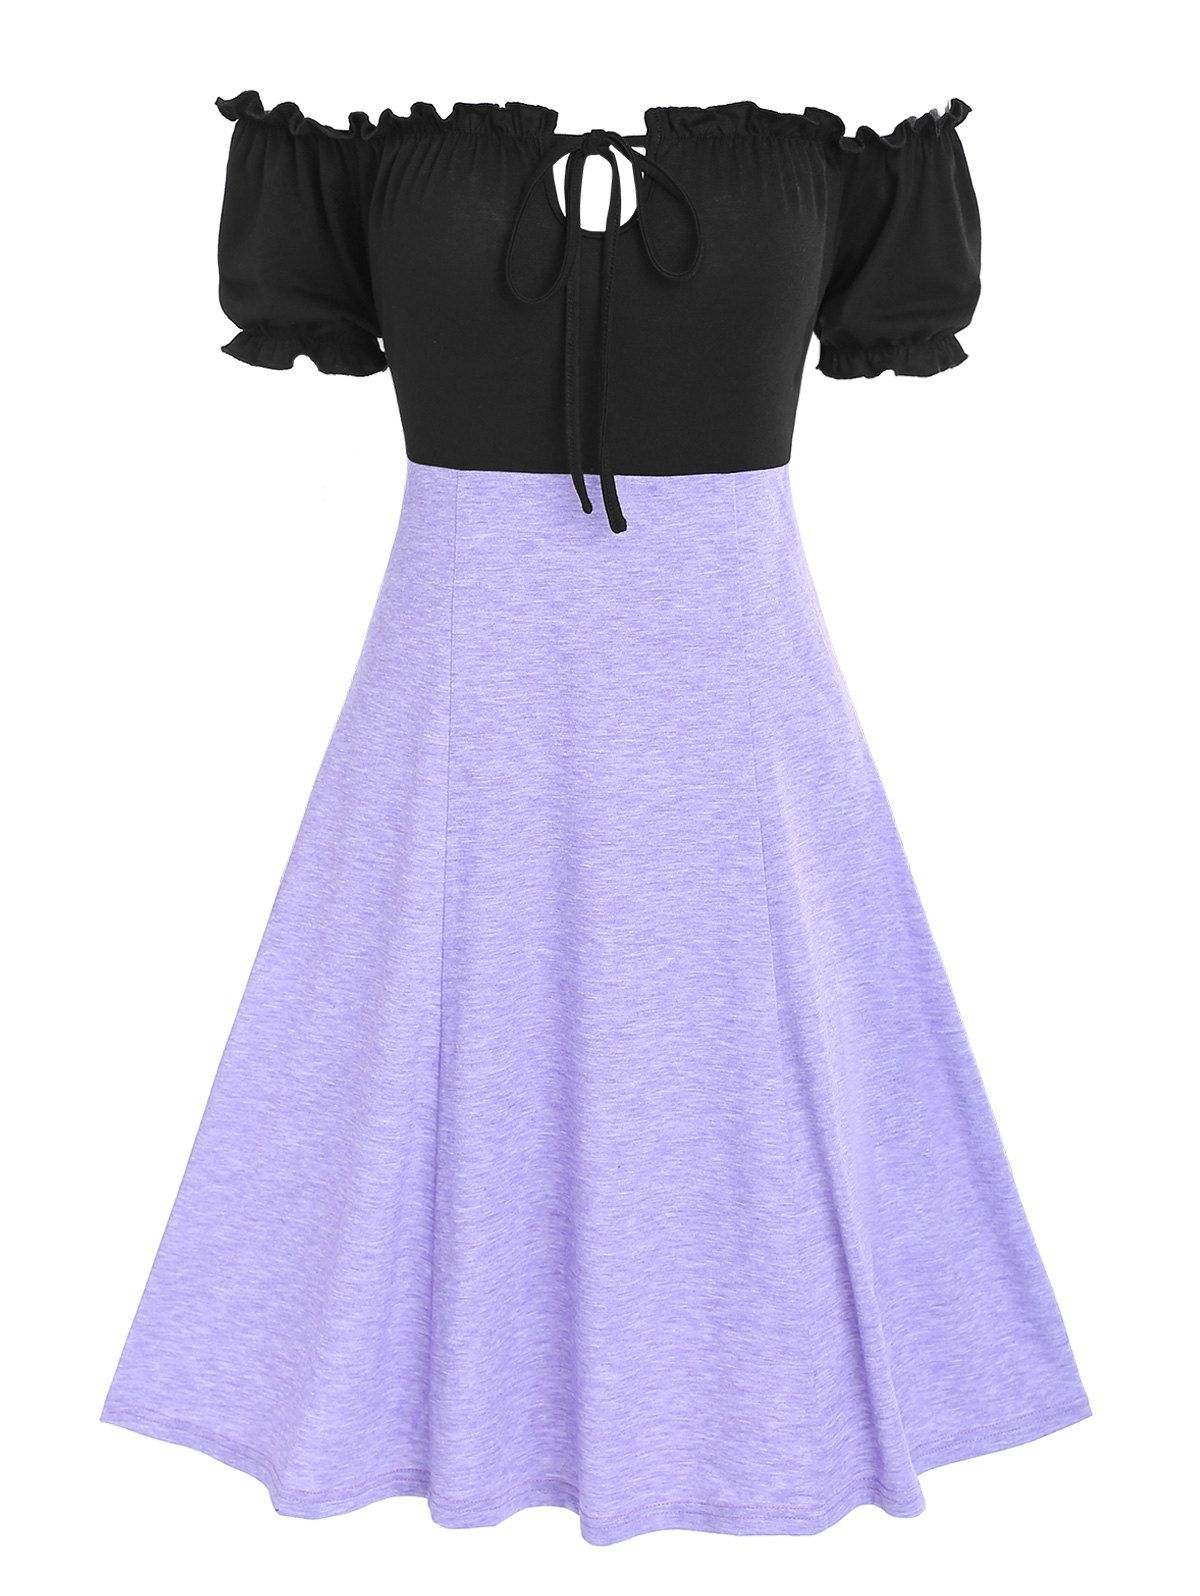 Contrast Bicolor Colorblock Off Shoulder Puff Sleeve Frilled A Line Dress - LIGHT PURPLE M